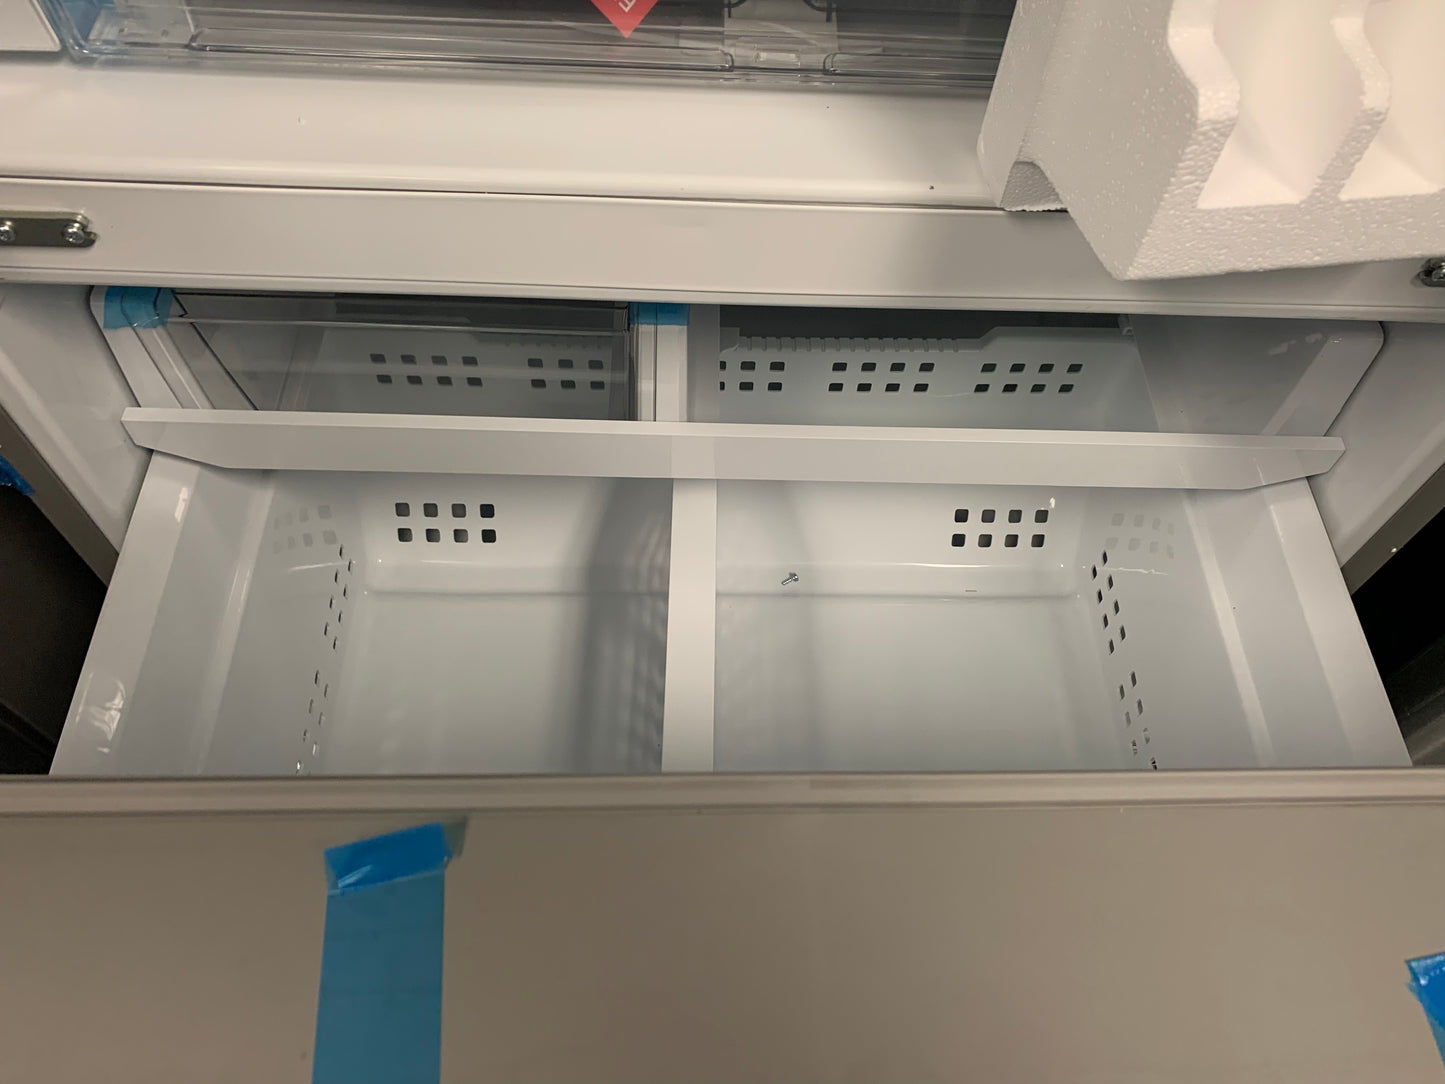 **New** Frigidaire 28.8 cu ft French Door Refrigerator